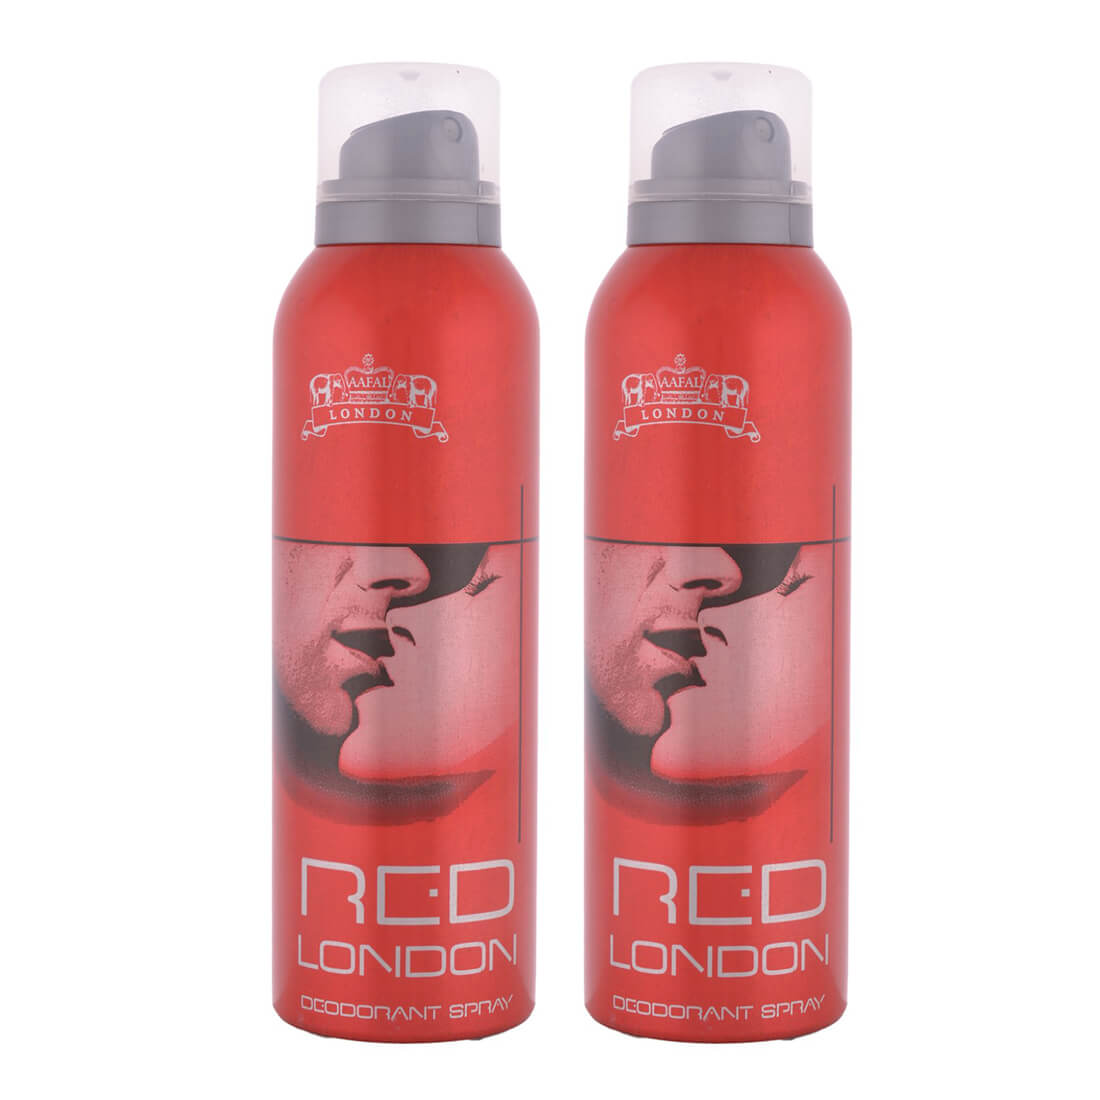 London Red Deodorant Body Spray Pack of 2 x 200ml